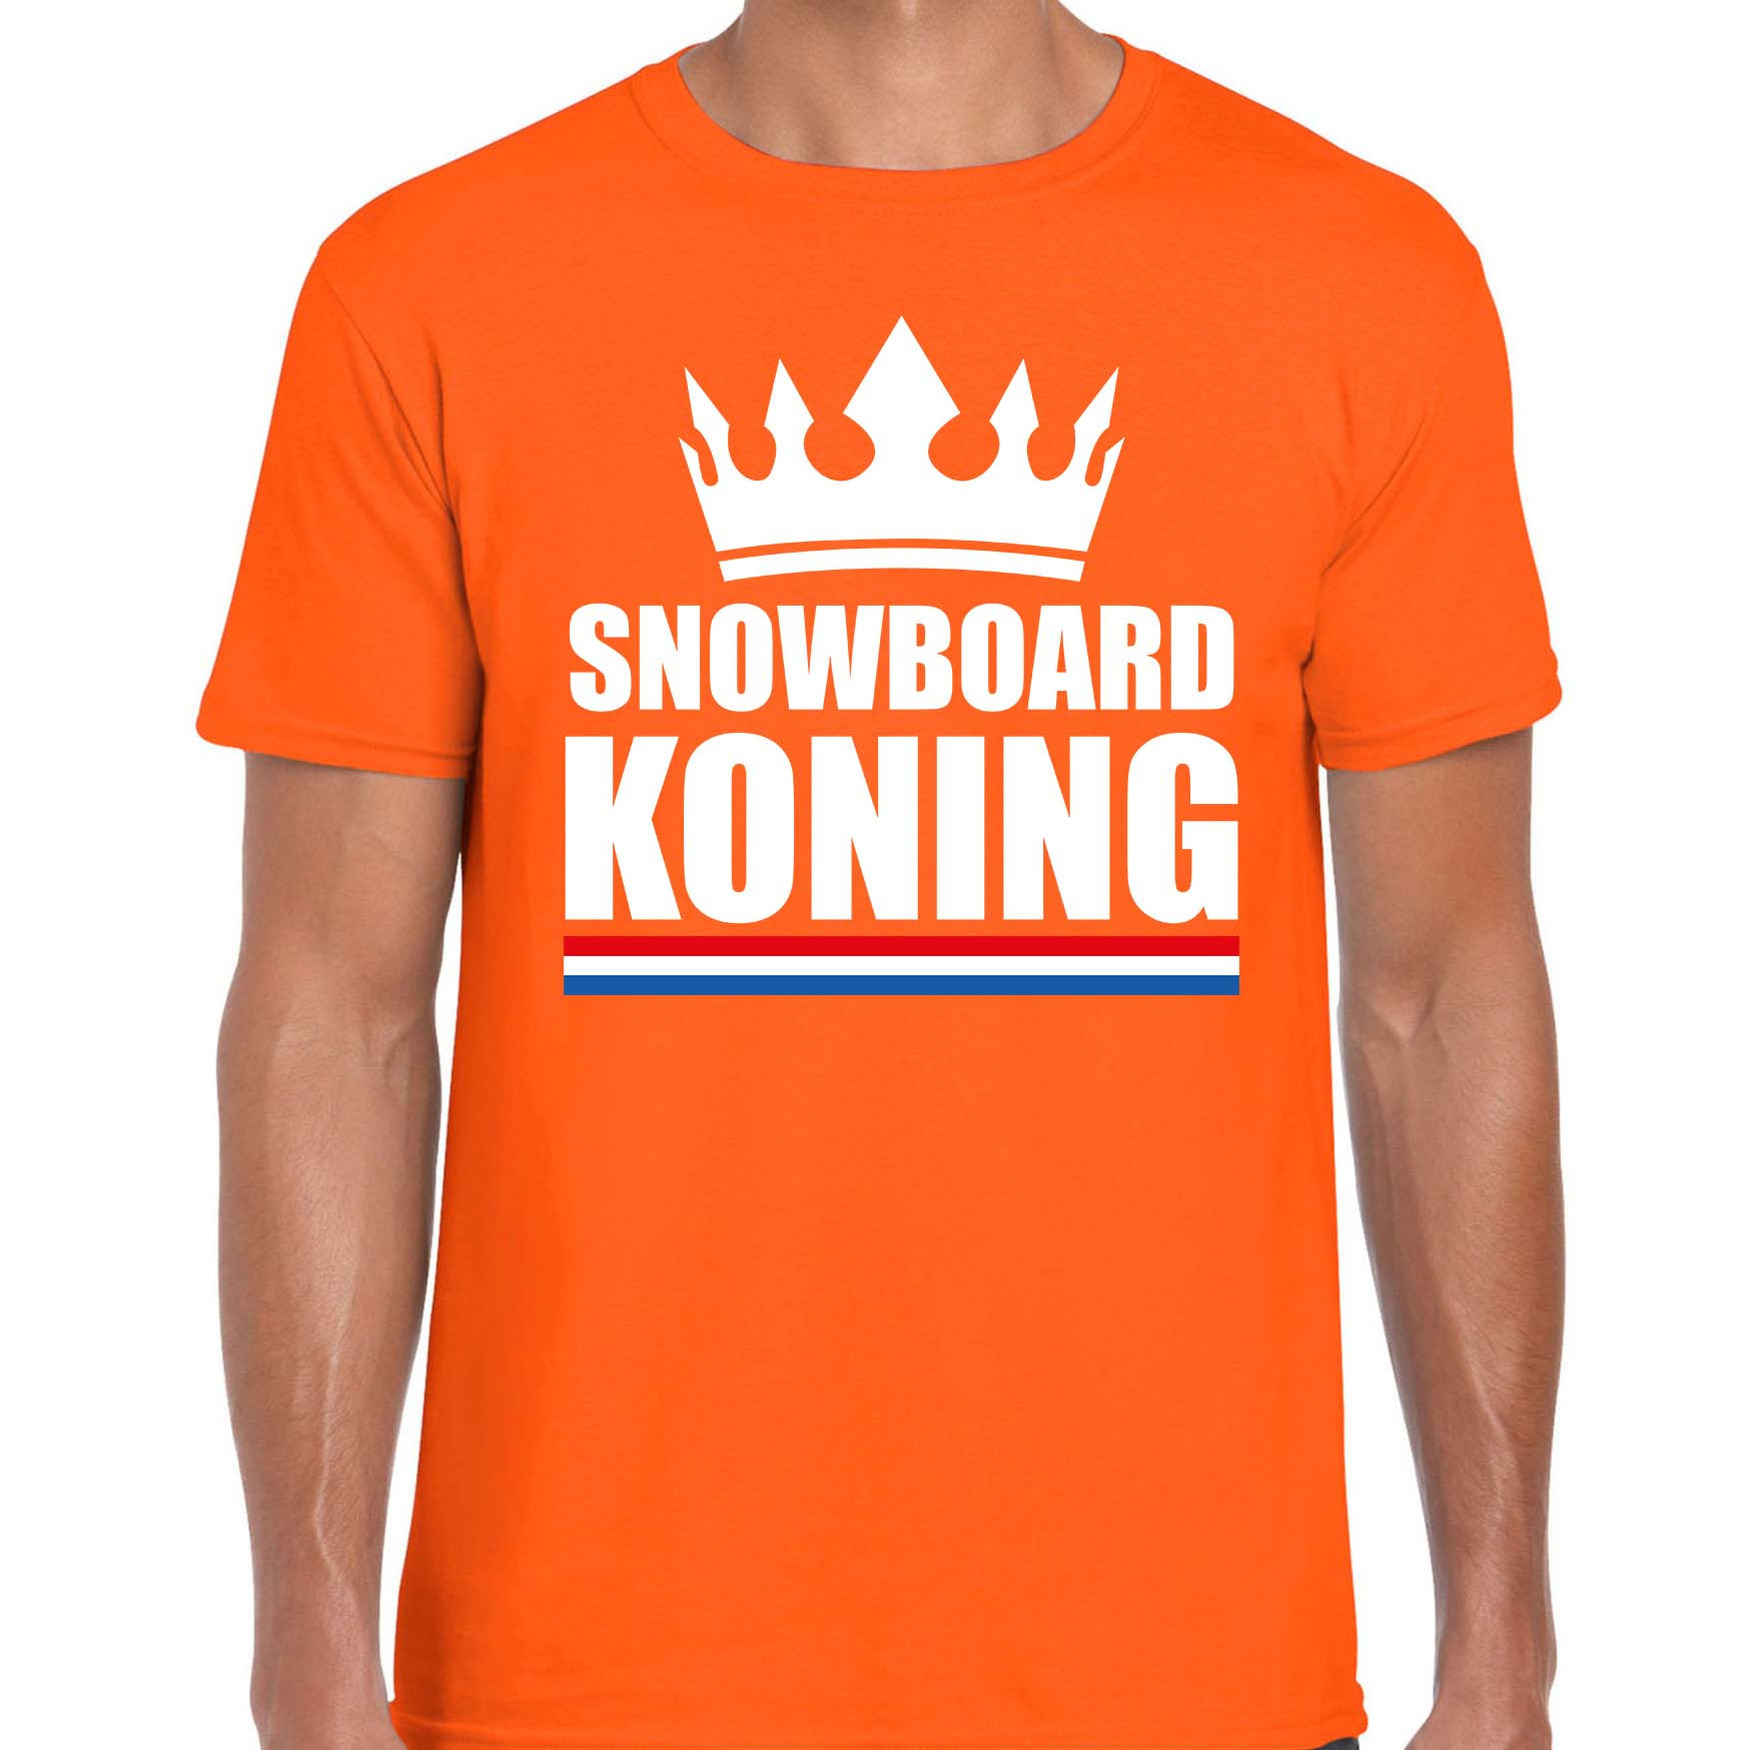 Snowboard koning apres ski t-shirt oranje heren Sport-hobby shirts